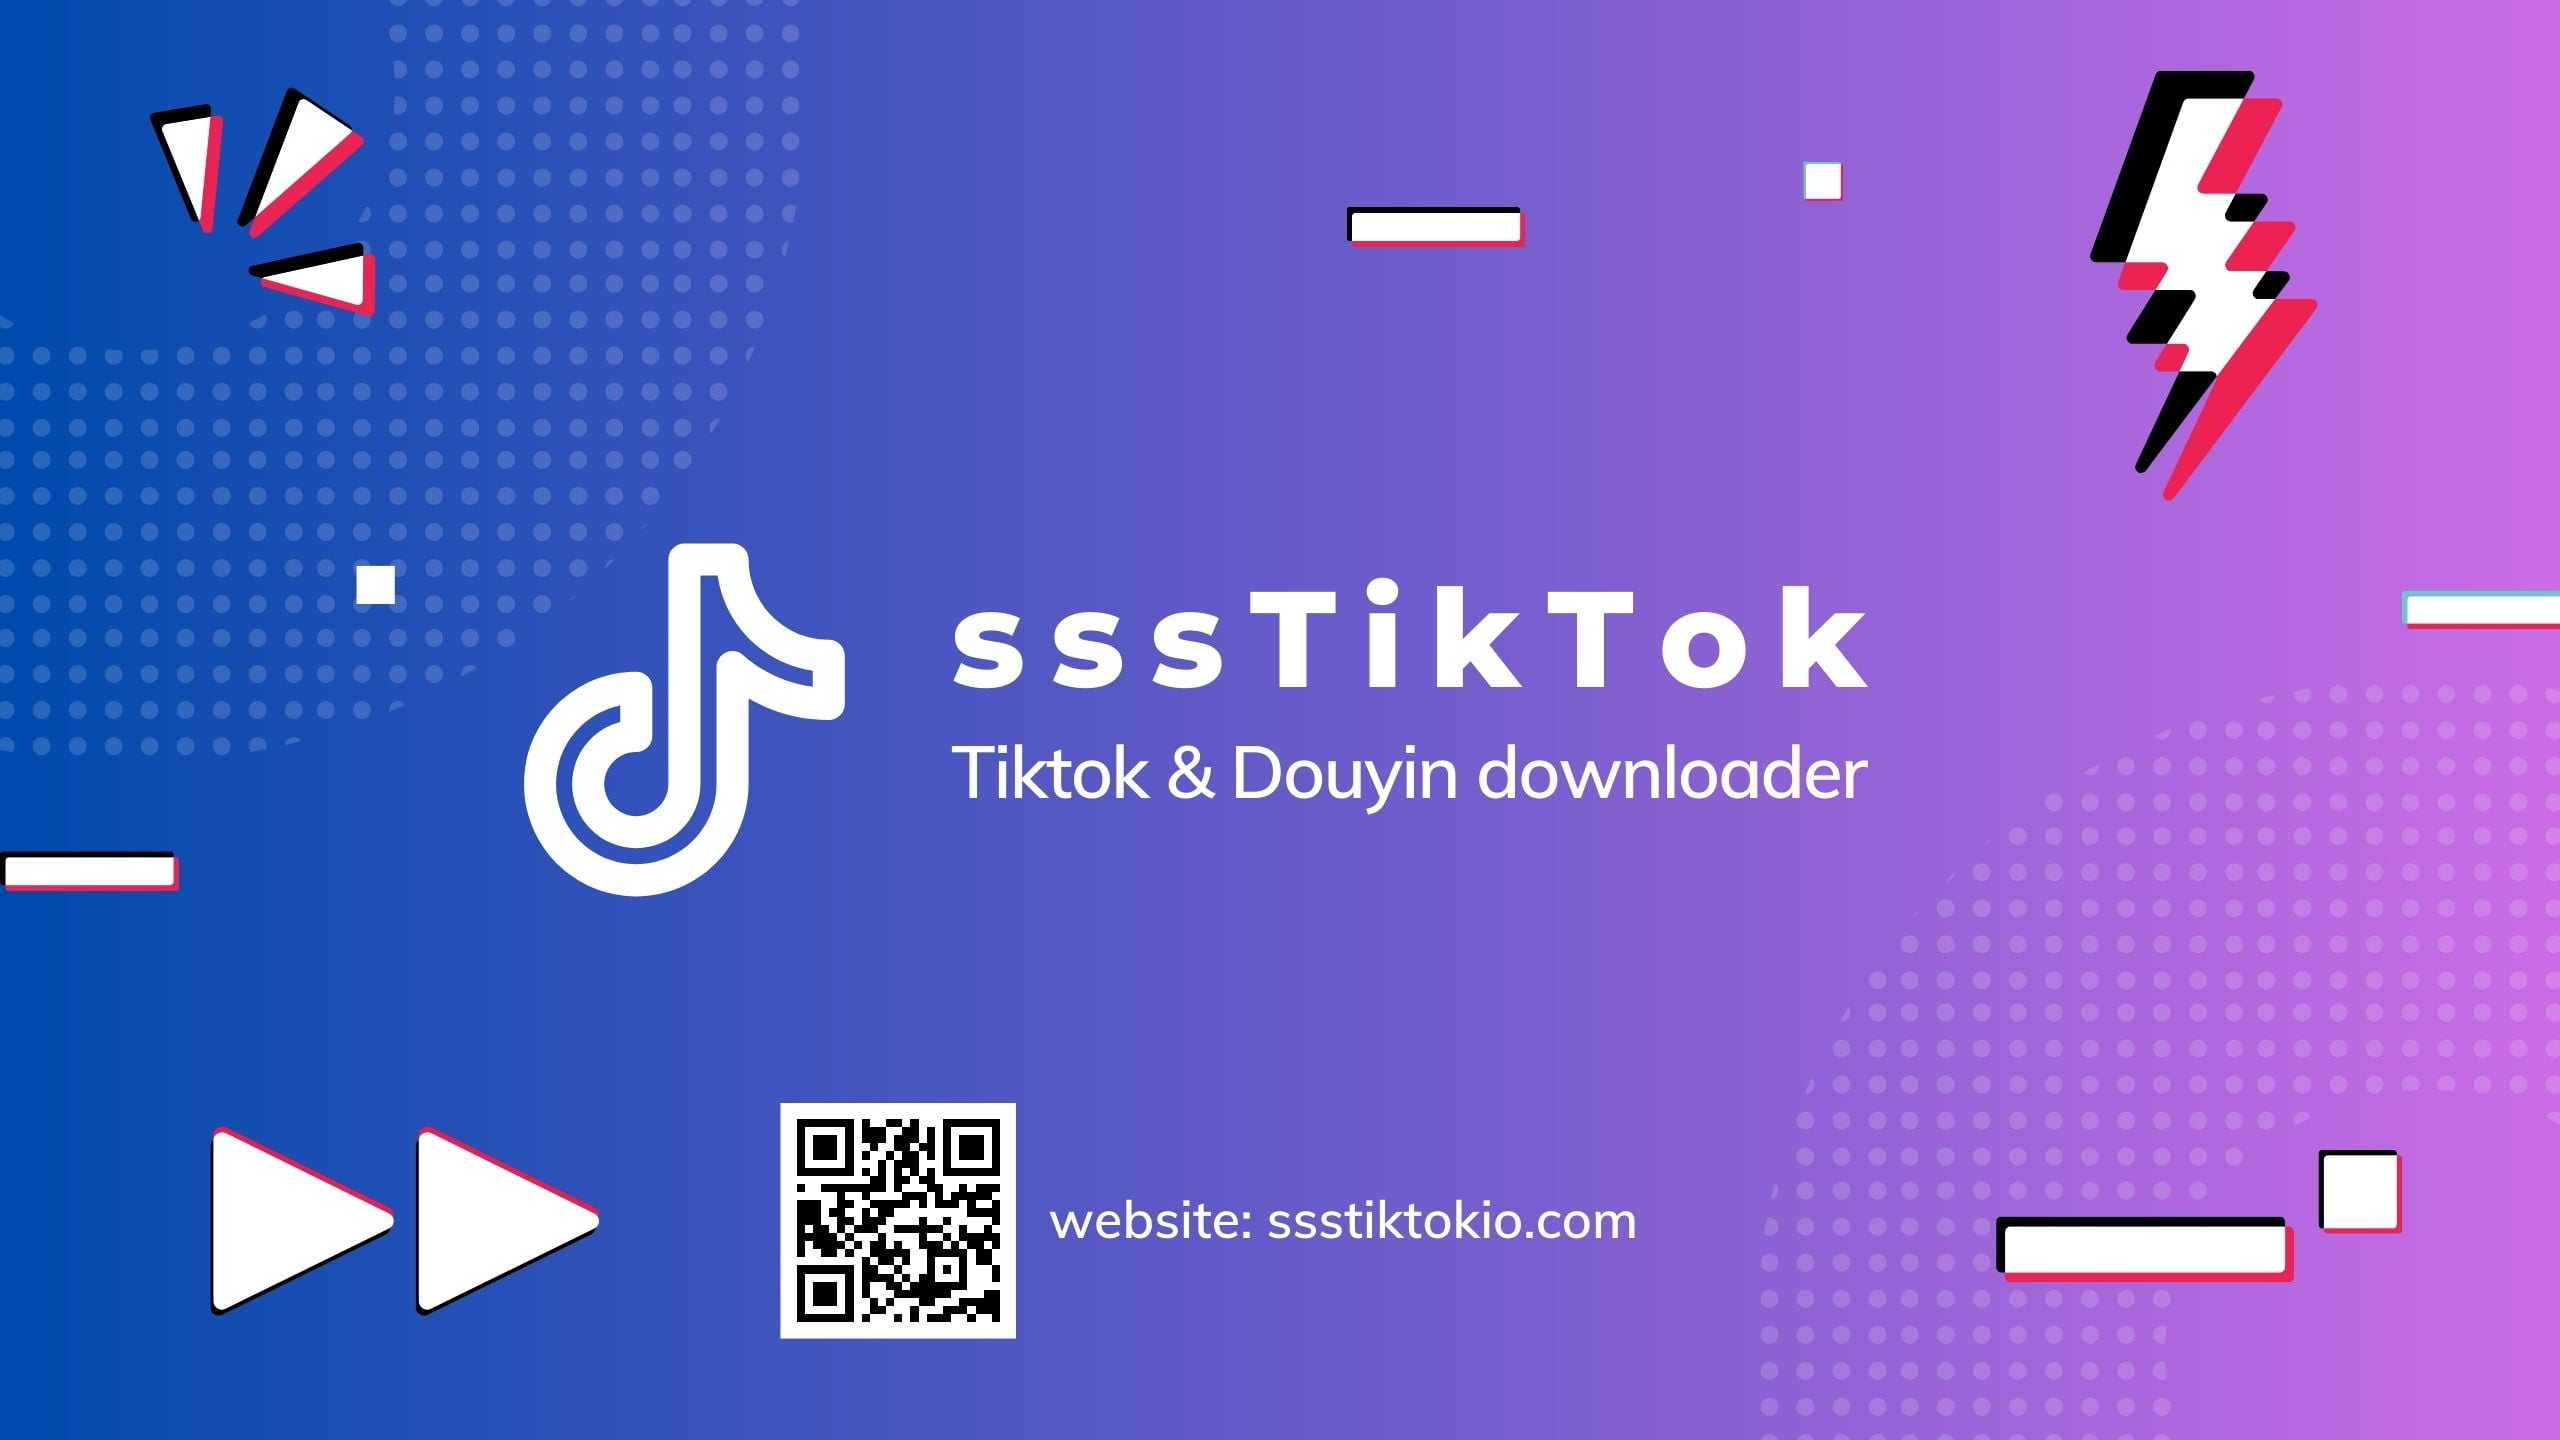 sssTiktok - Descargador de videos Tiktok en línea gratuito